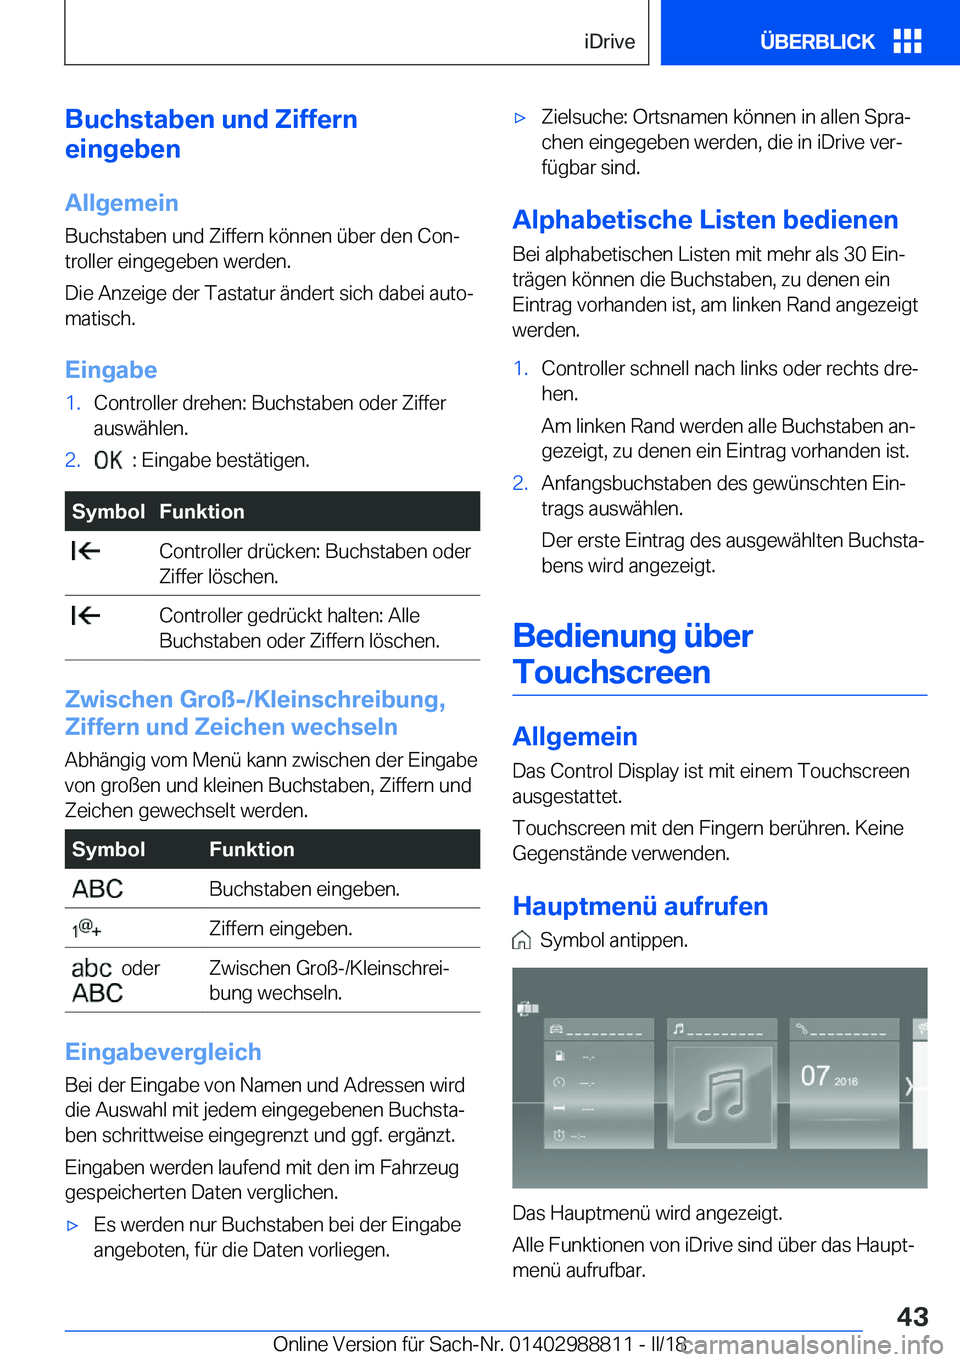 BMW X5 2018  Betriebsanleitungen (in German) �B�u�c�h�s�t�a�b�e�n��u�n�d��Z�i�f�f�e�r�n
�e�i�n�g�e�b�e�n
�A�l�l�g�e�m�e�i�n �B�u�c�h�s�t�a�b�e�n� �u�n�d� �Z�i�f�f�e�r�n� �k�